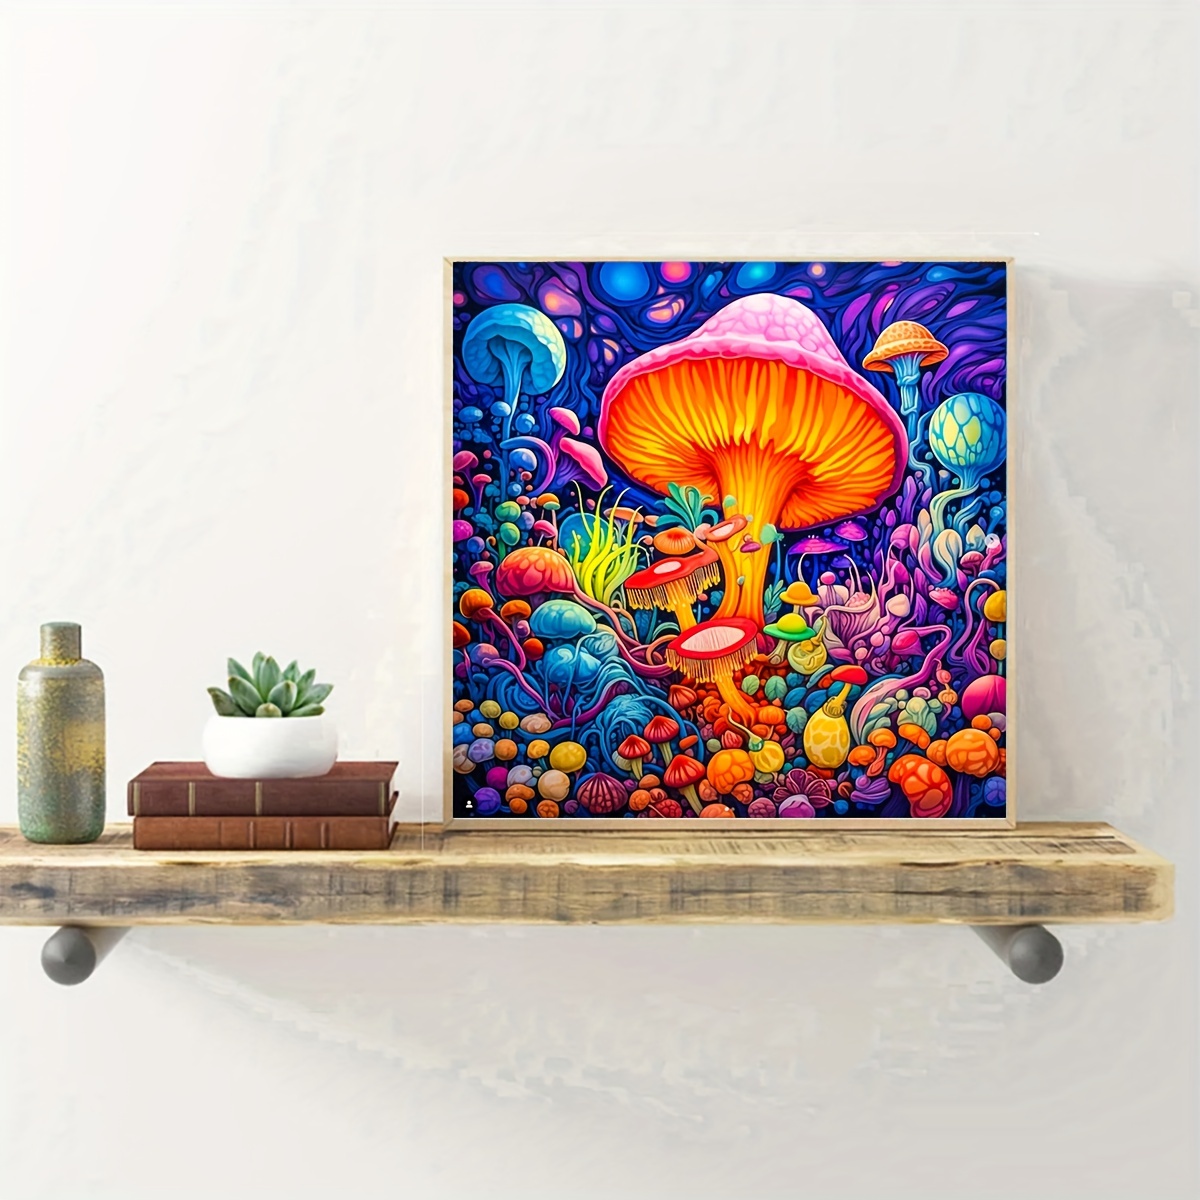 TISHIRON Diamond Painting Kits,12x16 inch 5D DIY Abstract Trippy Mushroom  Diamond Art Crafts Kit for Home Wall Decor Gift 